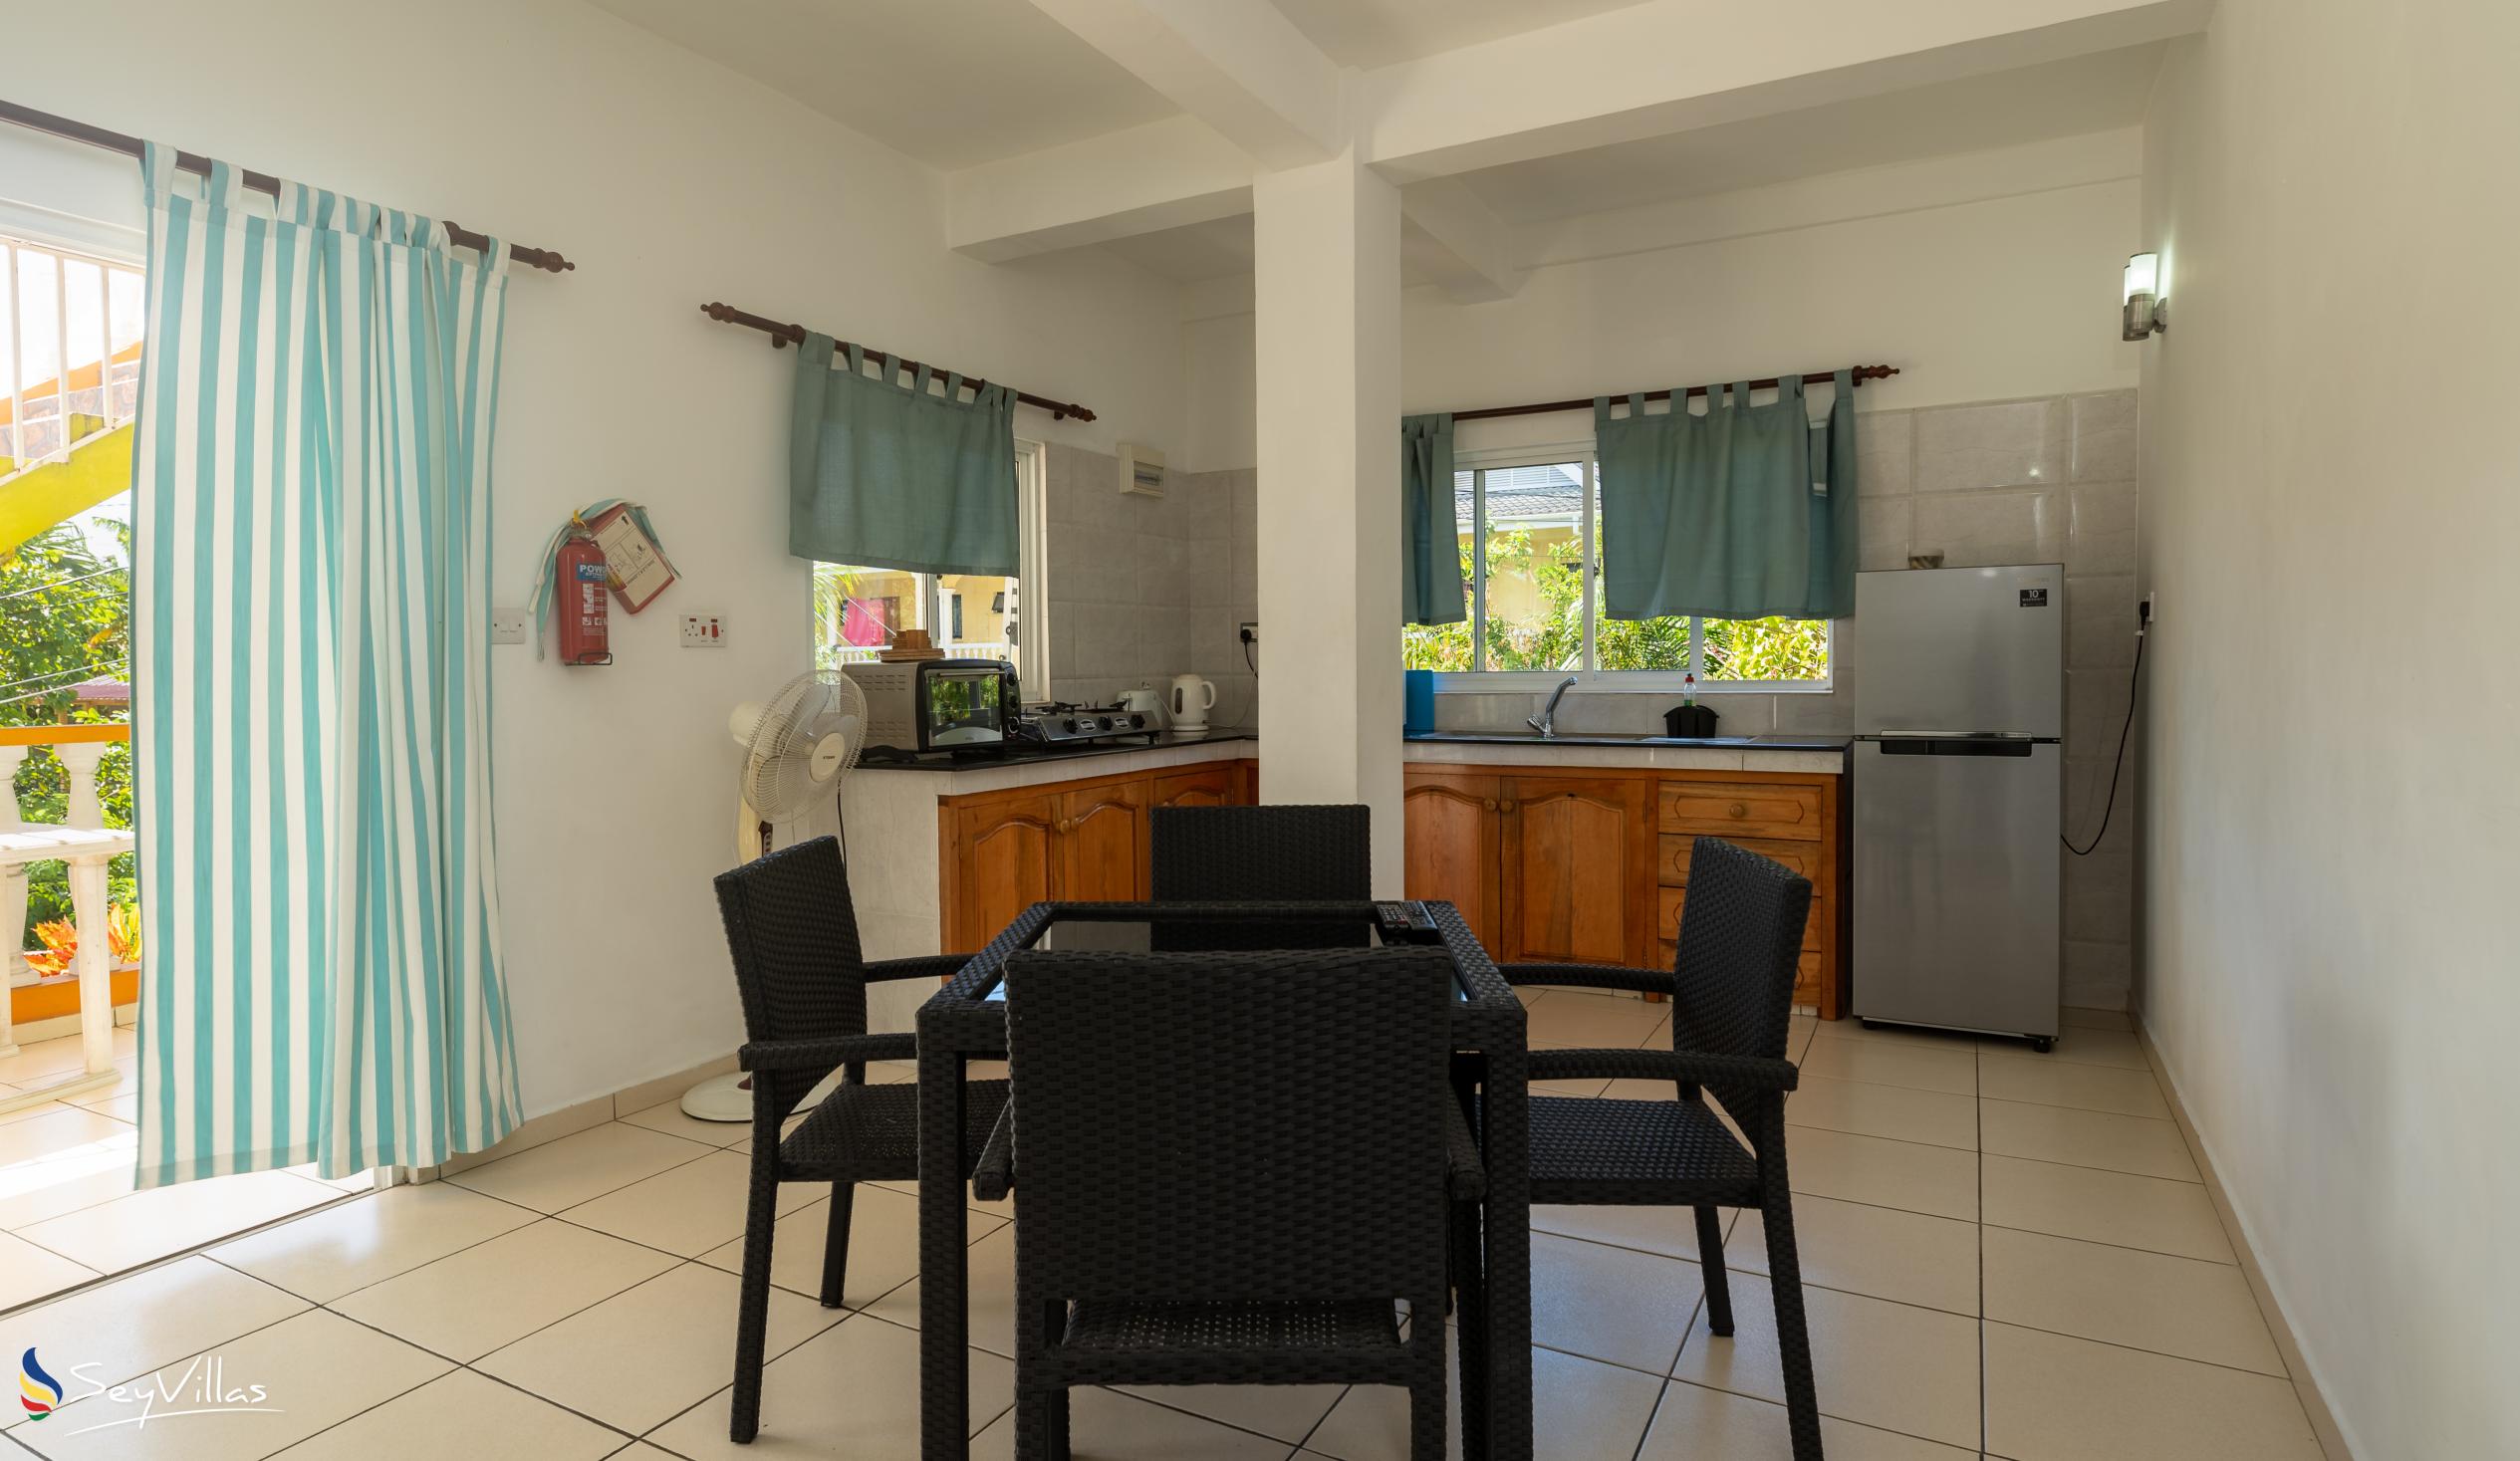 Foto 31: Chez Payet Self Catering - Appartement 1 Chambre Frangipani & Manglier - Mahé (Seychelles)